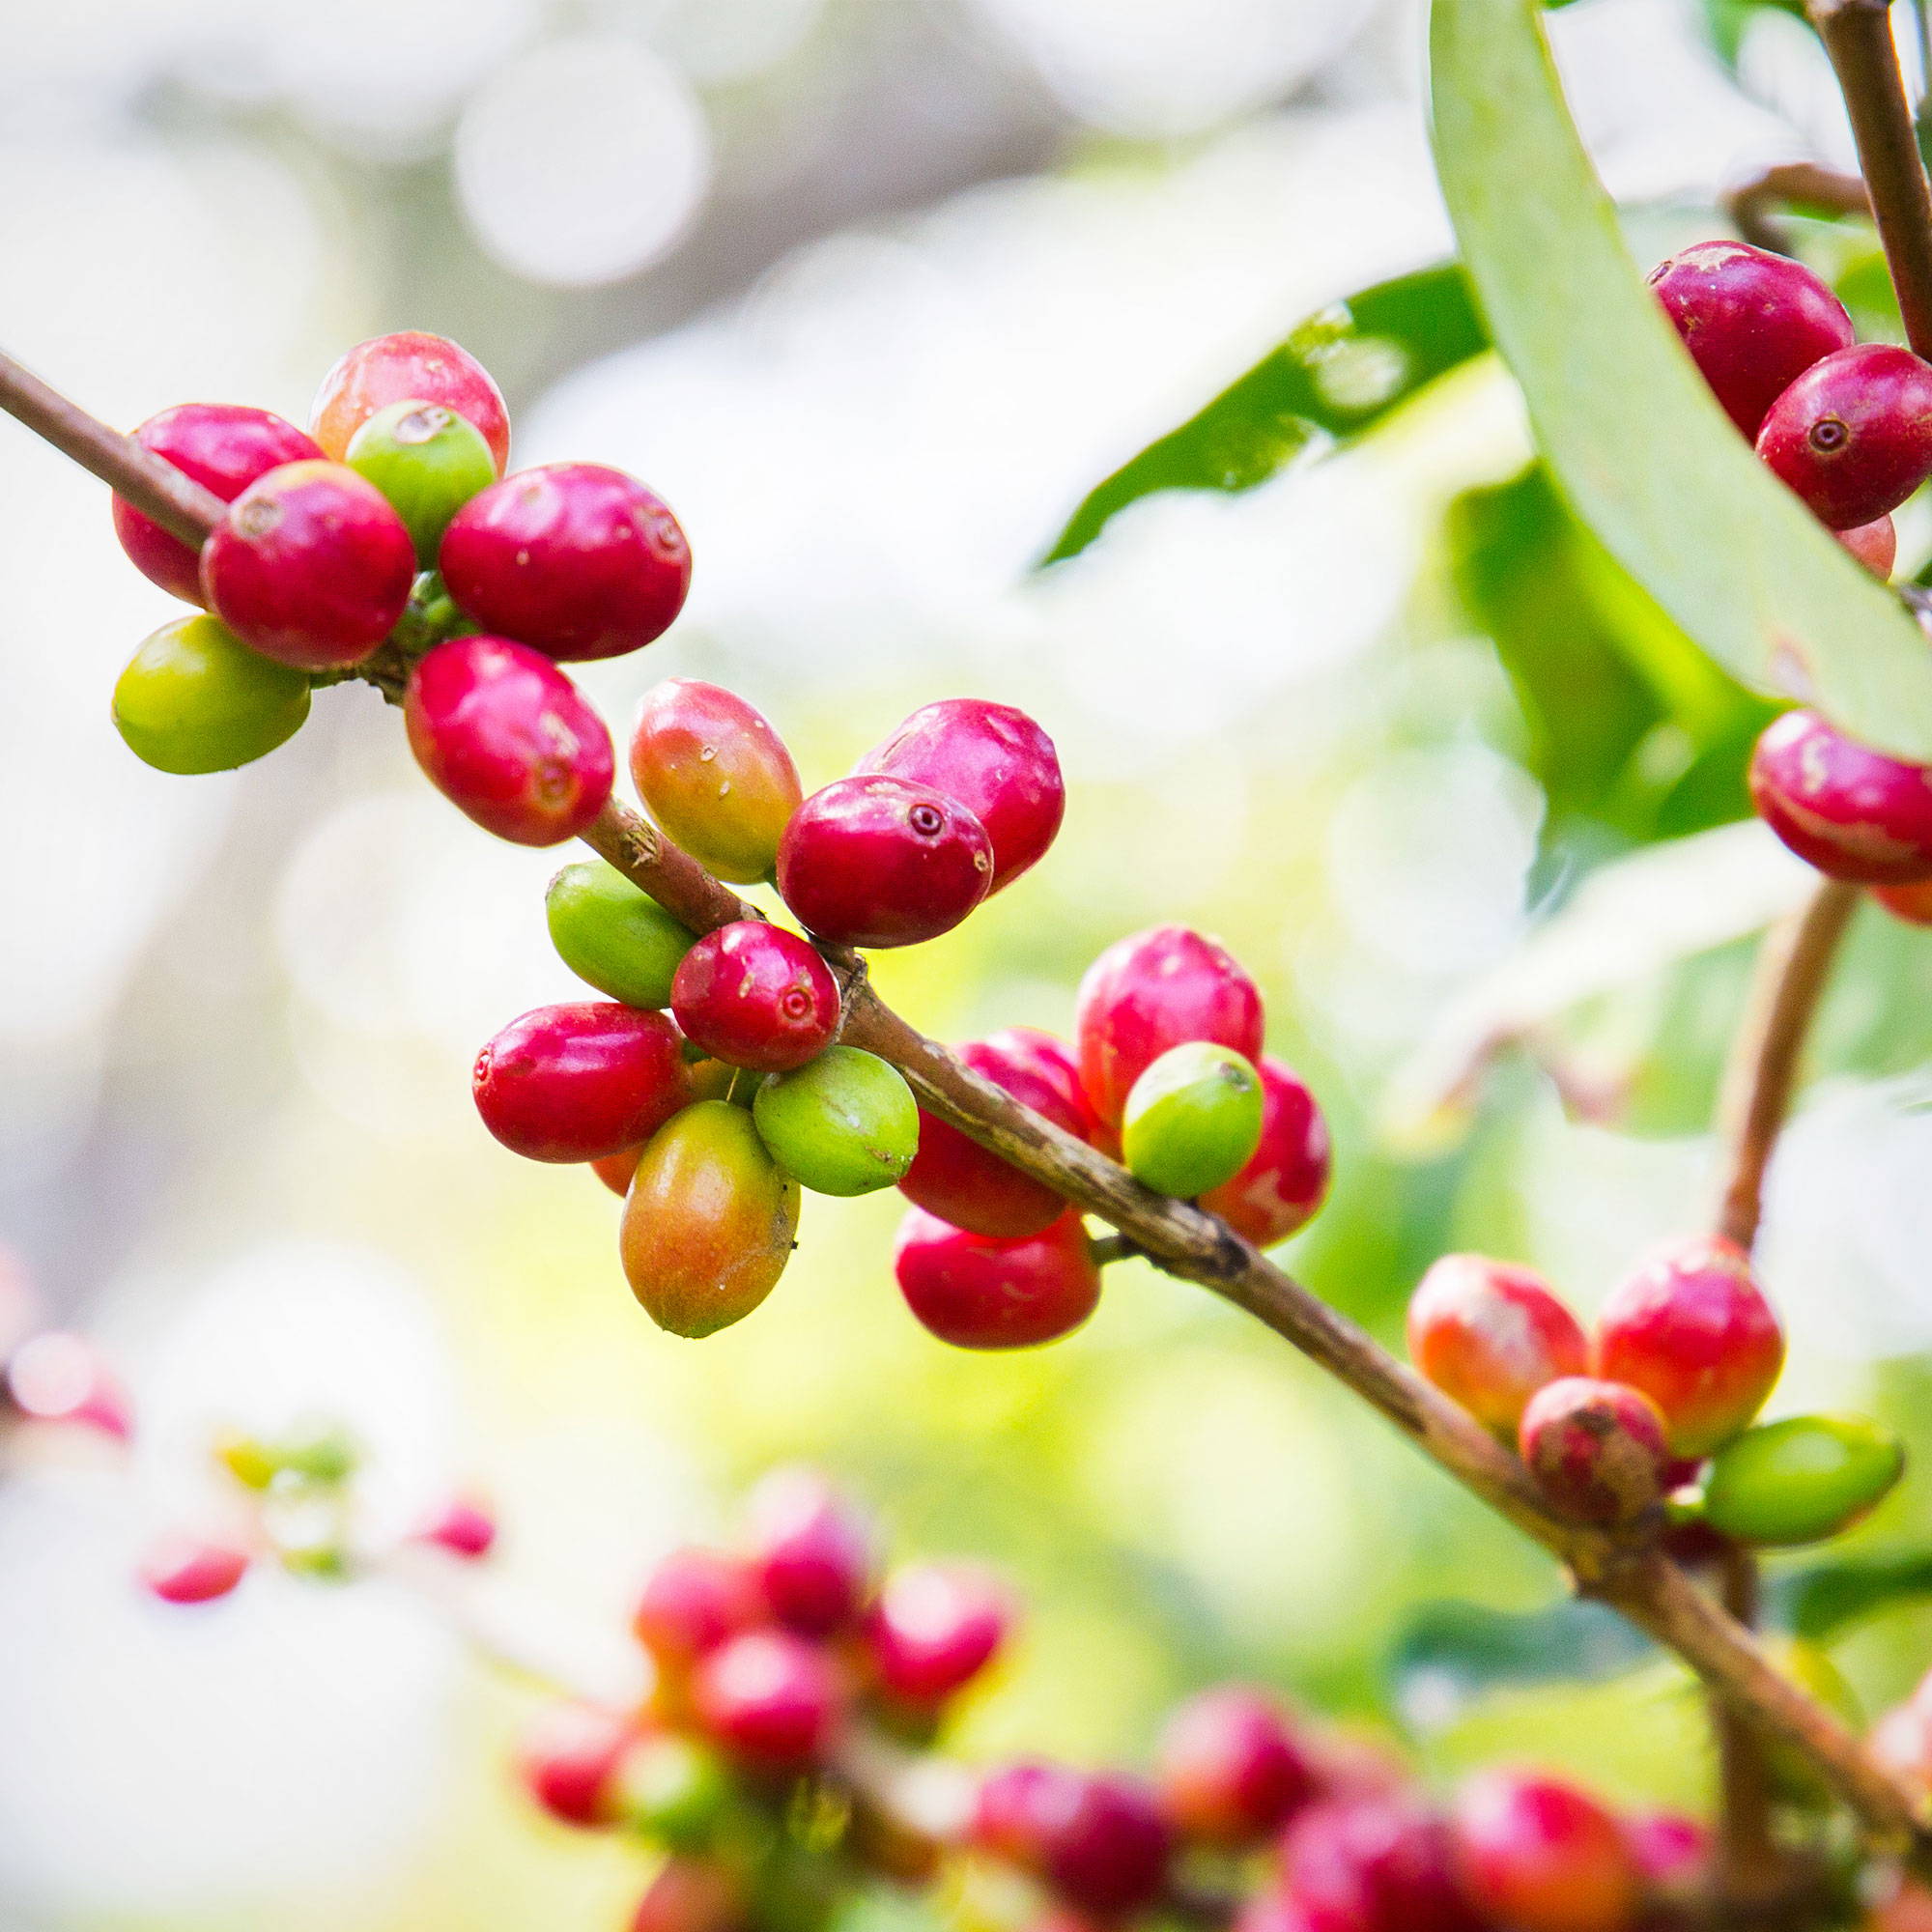 Coffee cherries on branch